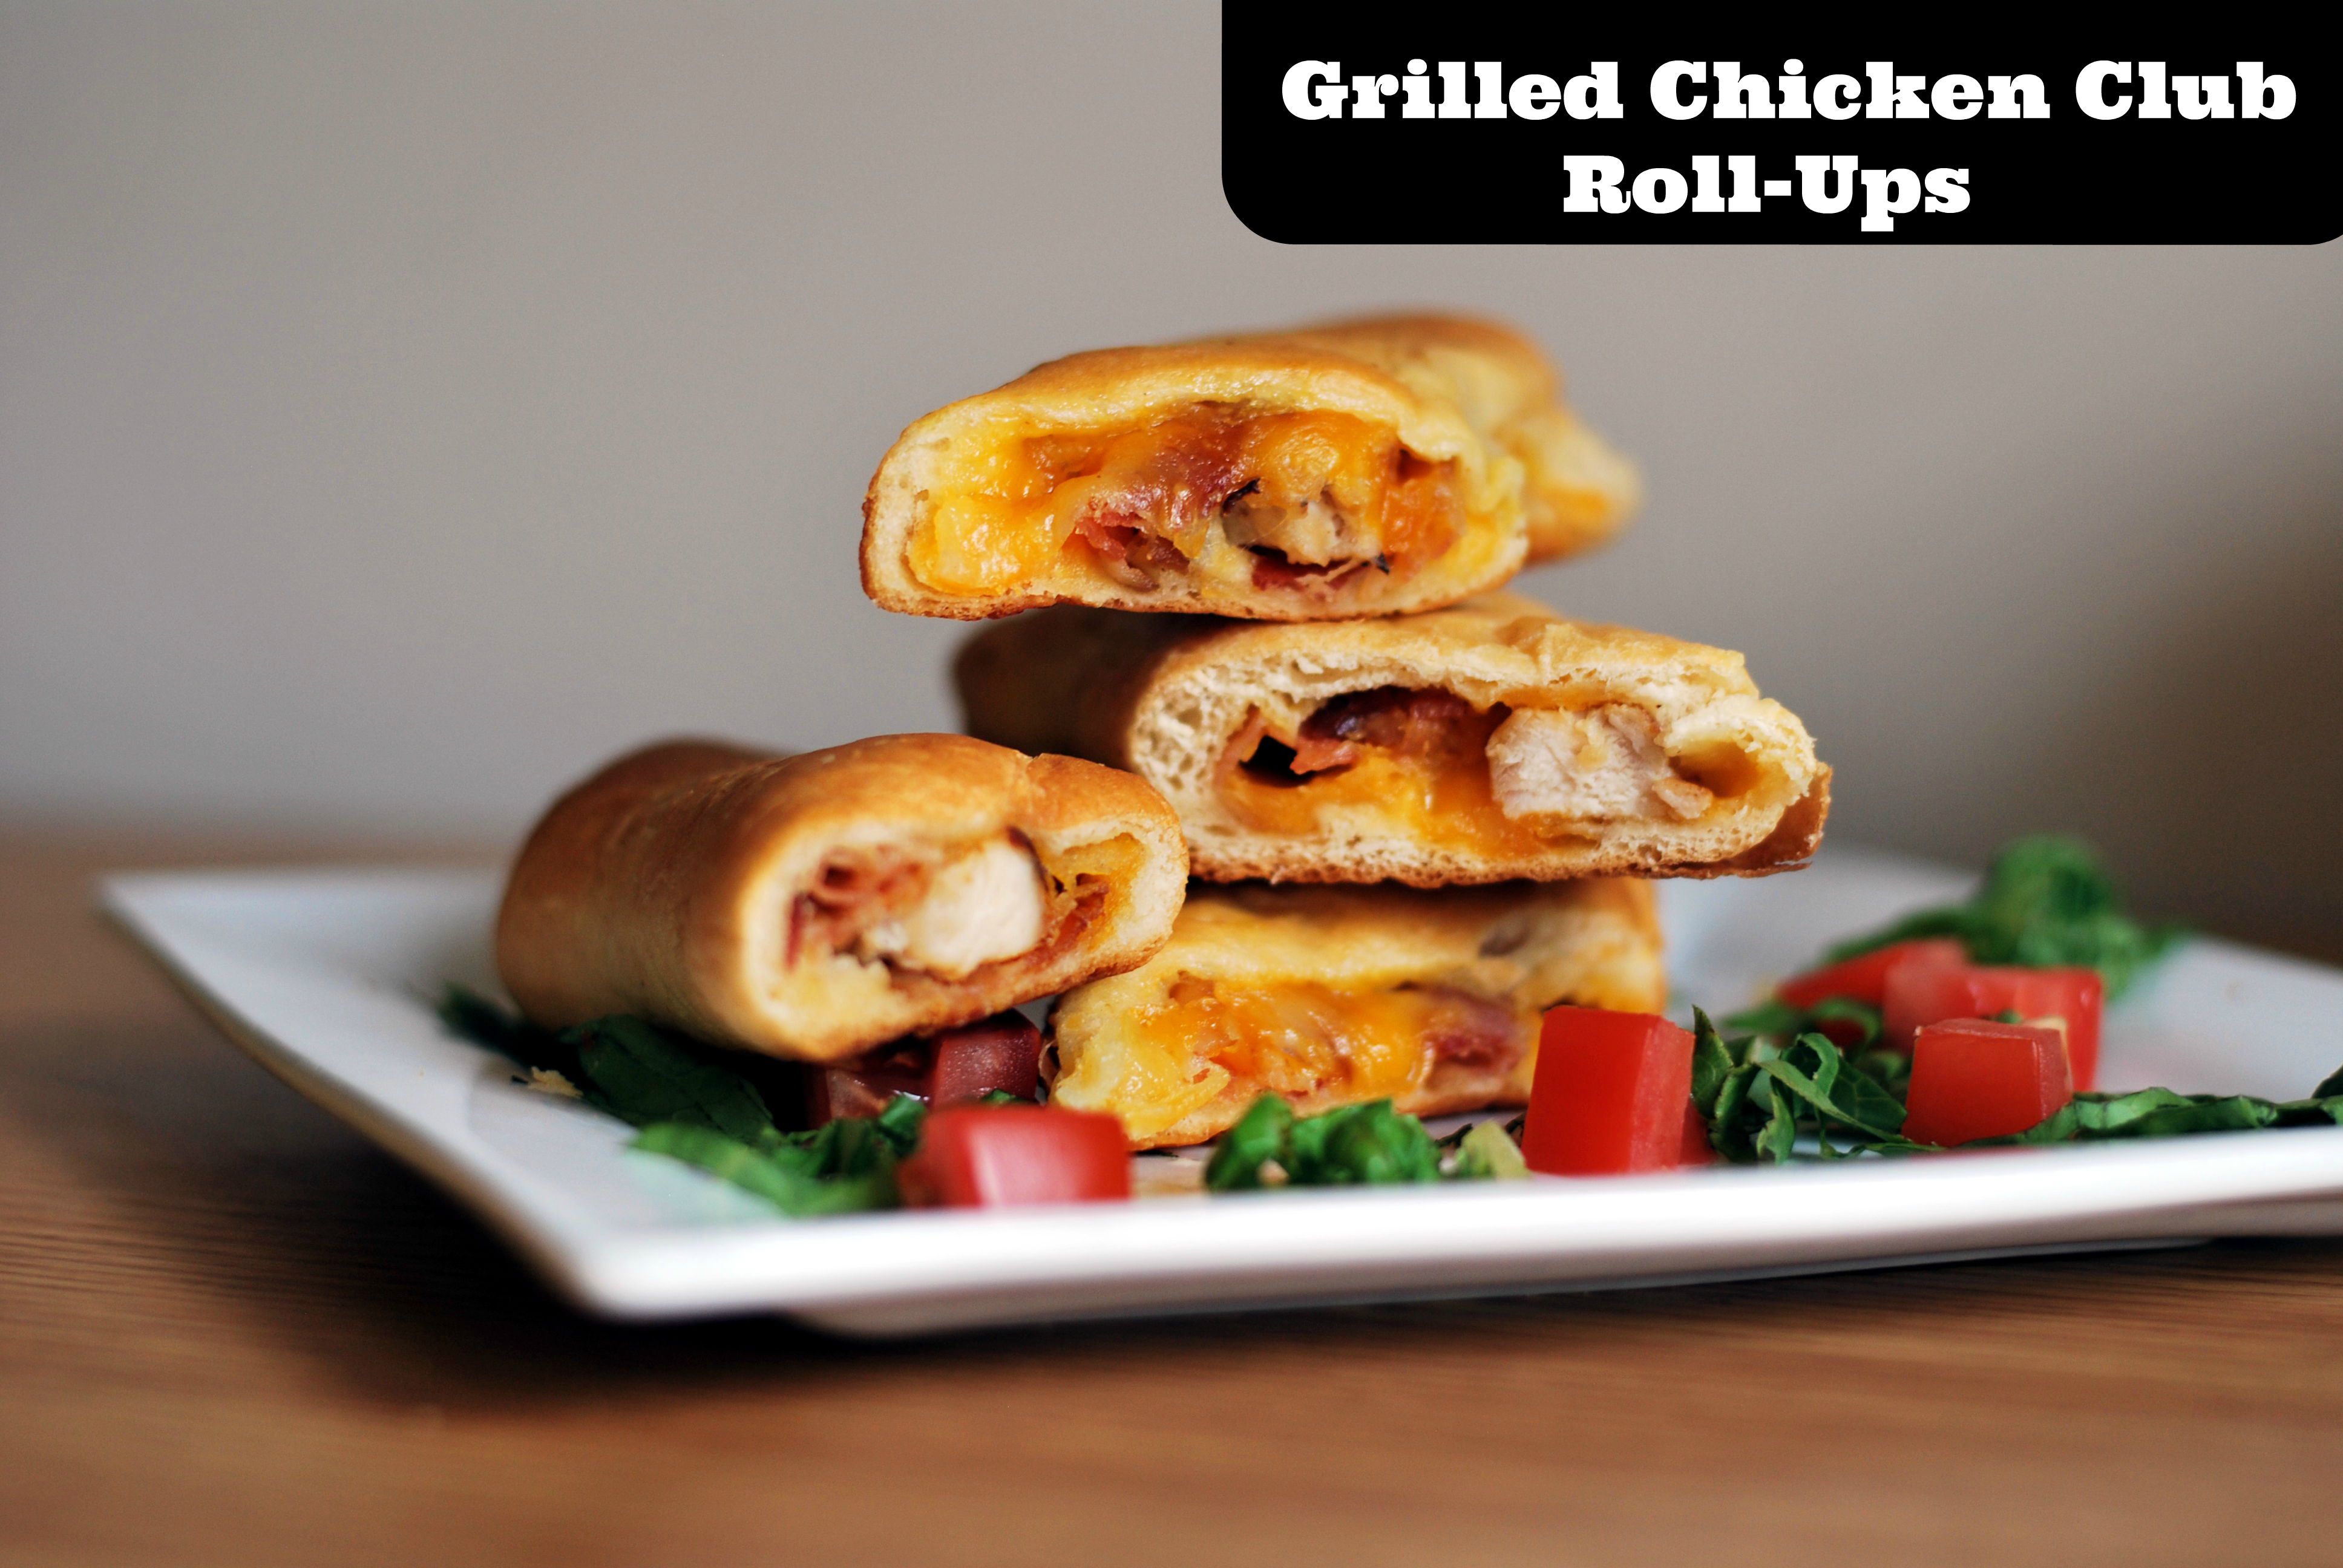 Grilled Chicken Club Roll-Ups